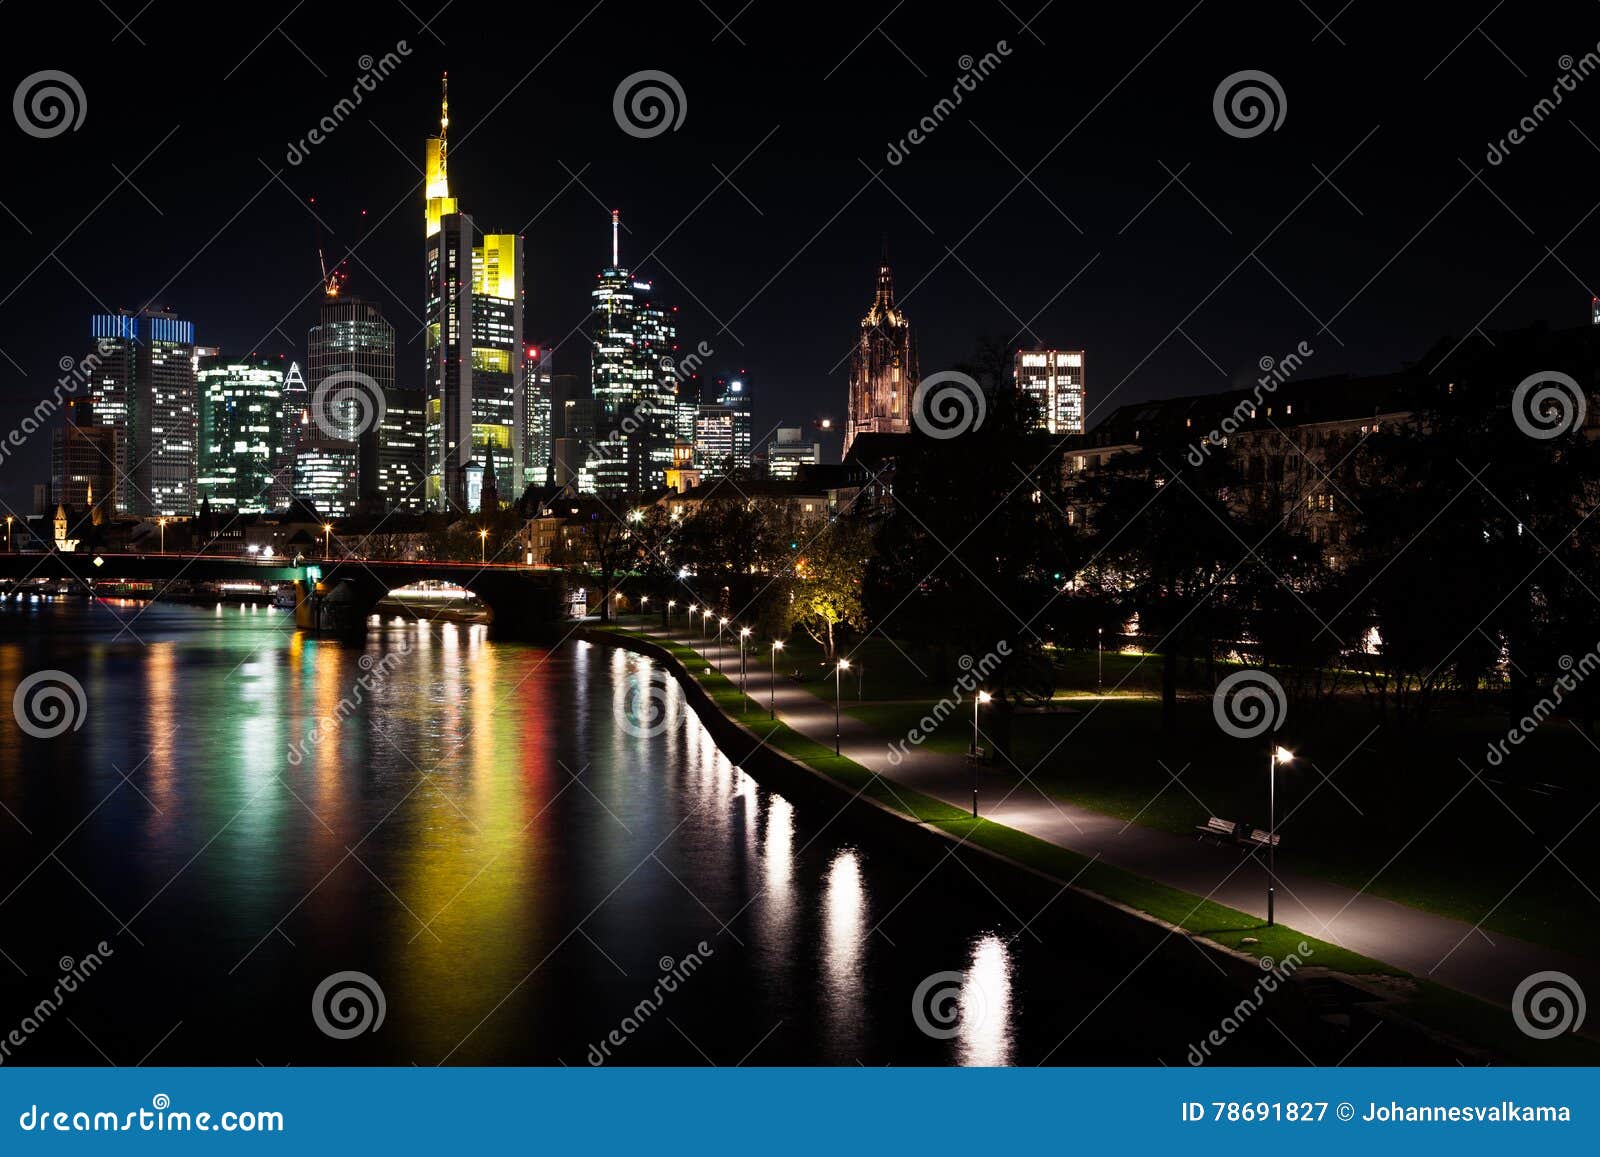 night cityscape of frankfurt